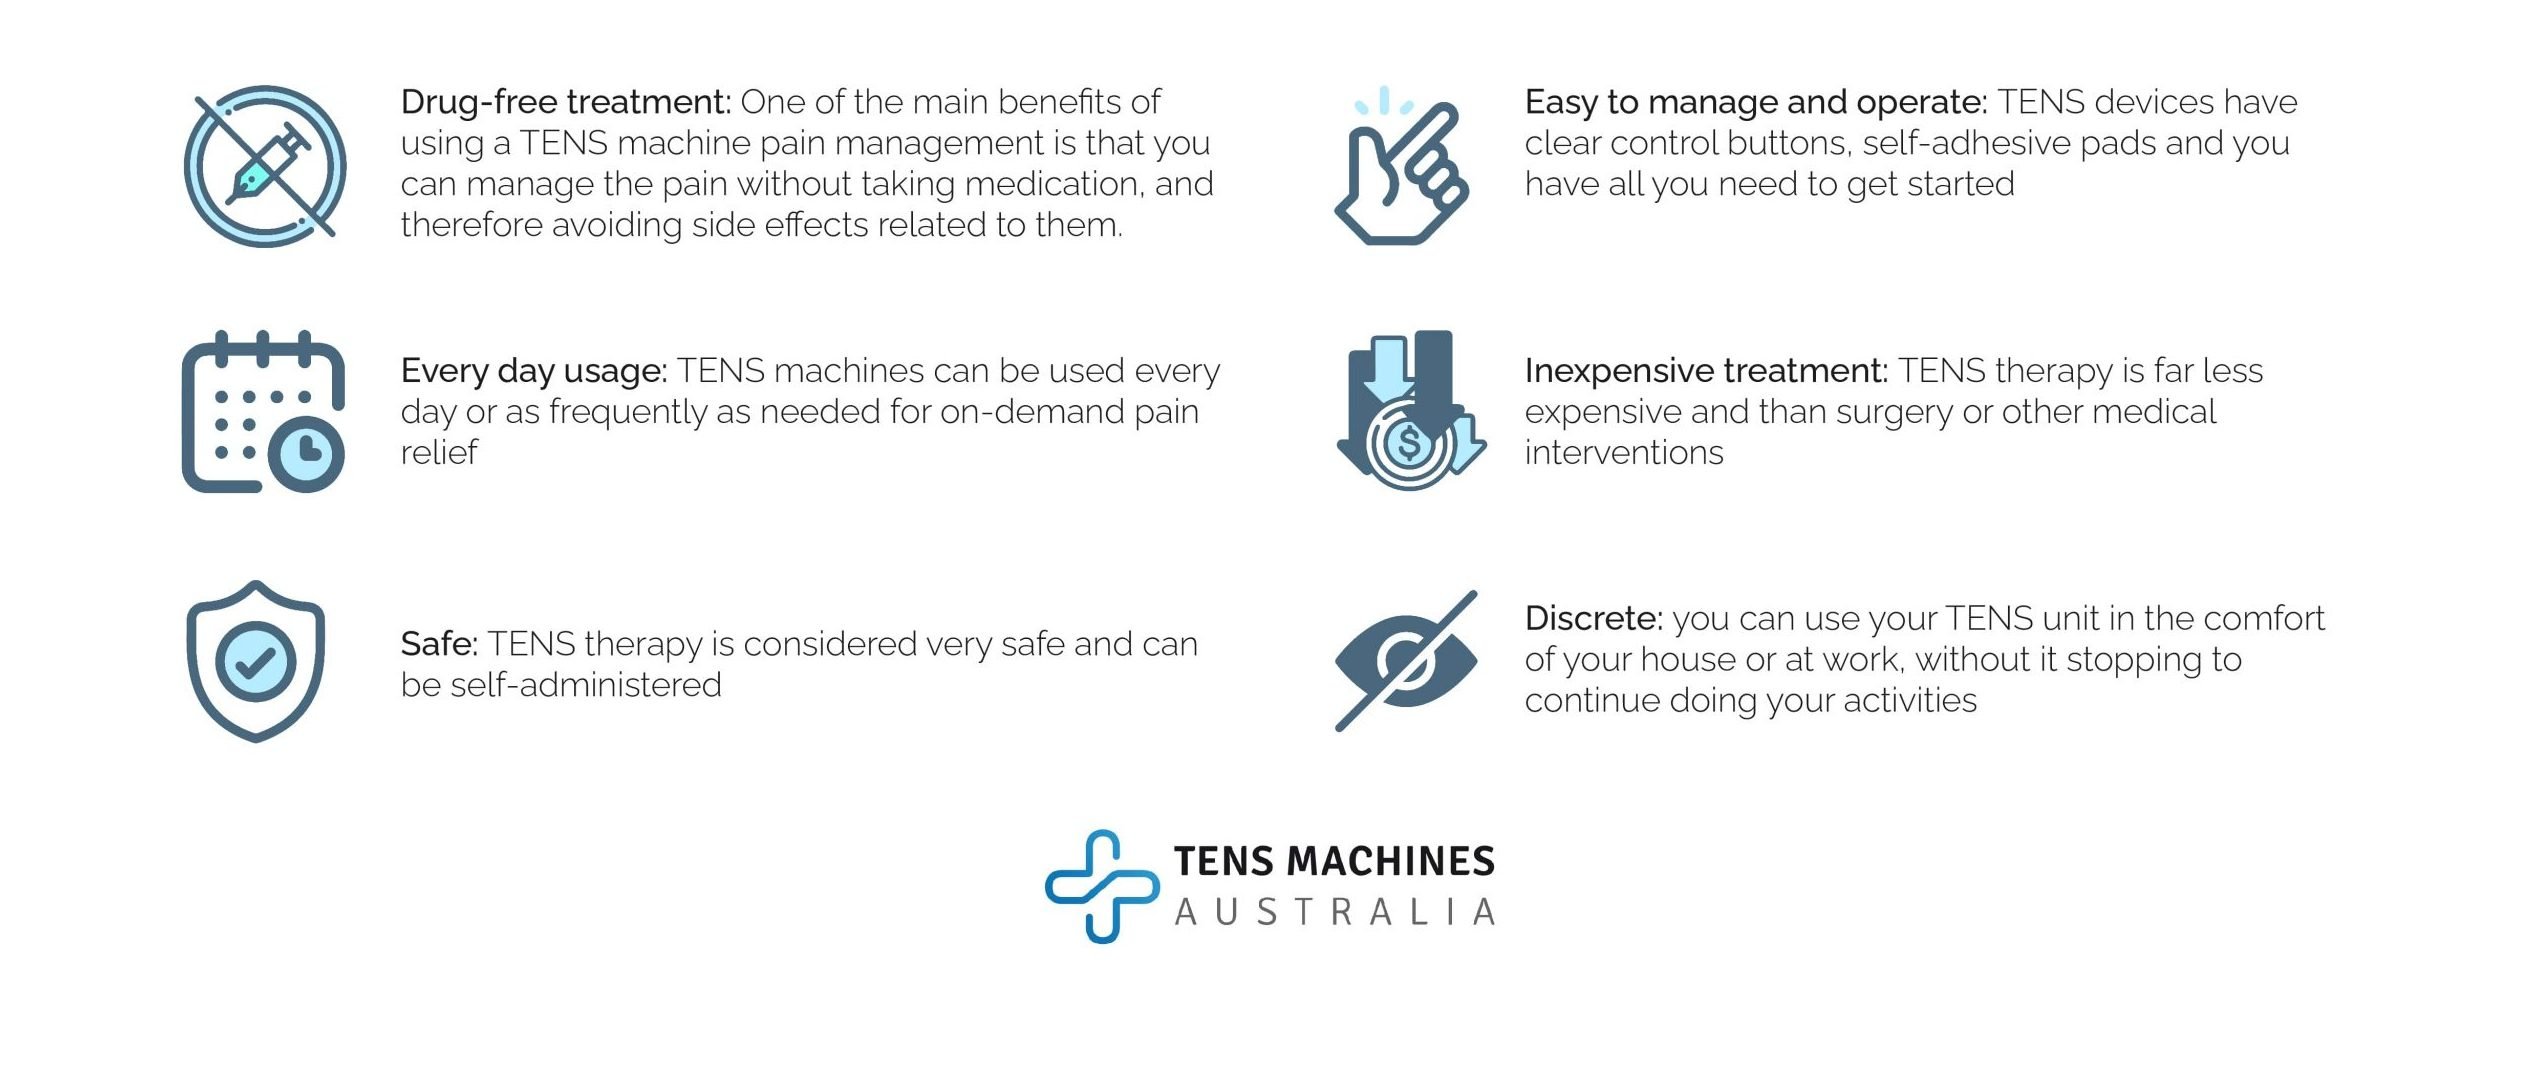 How Do TENS Machines Work?